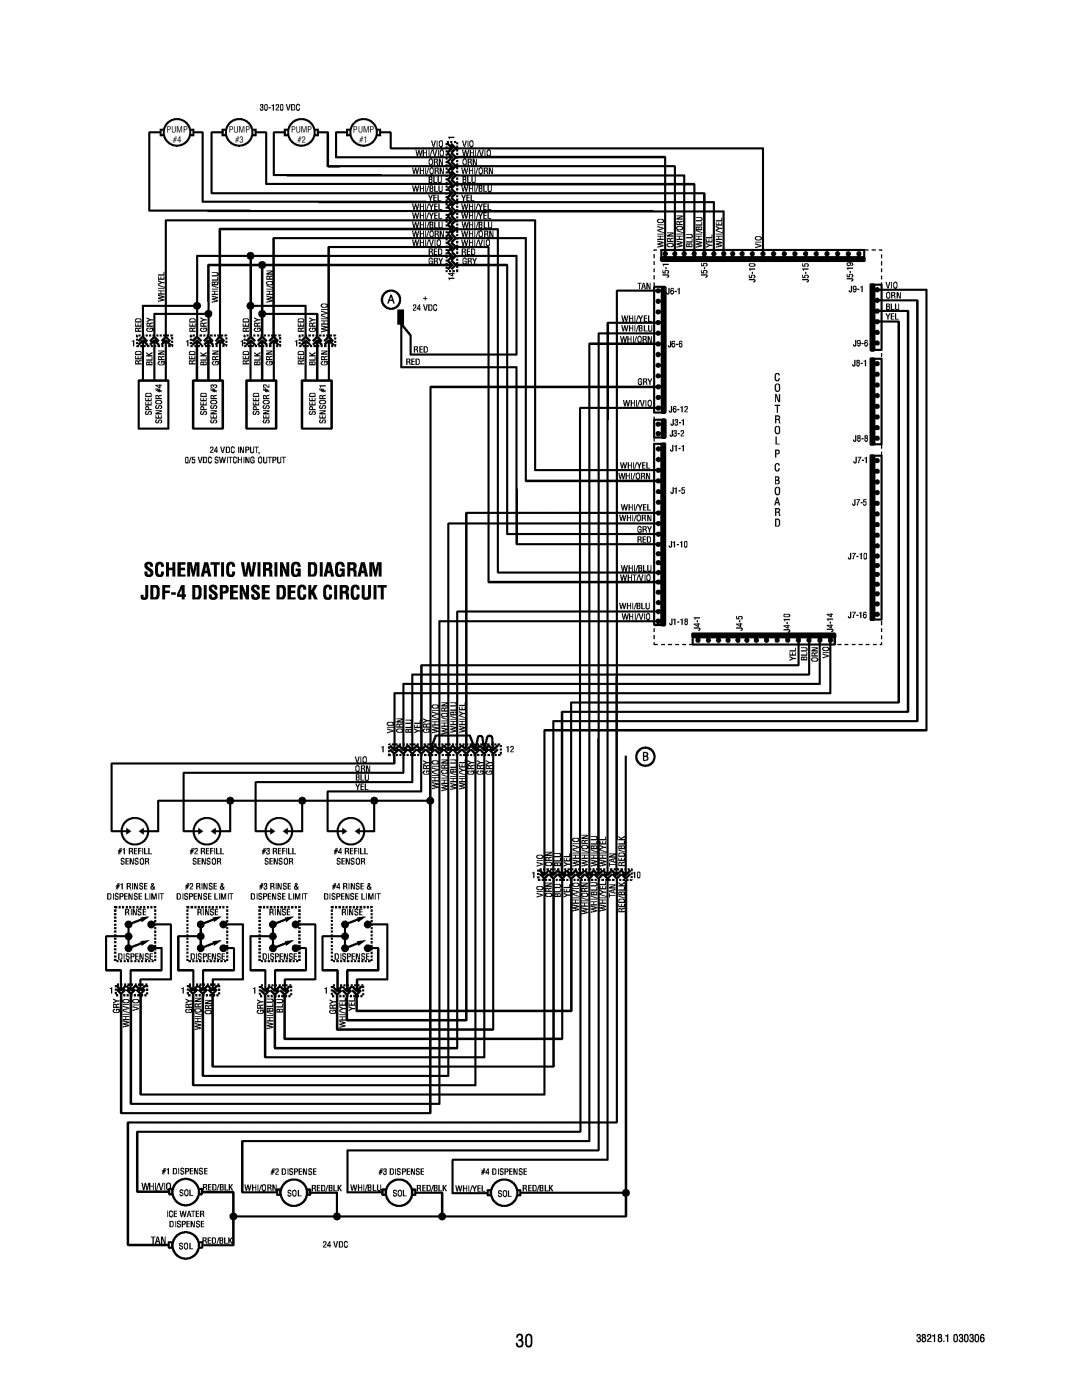 Bunn S/N 0005473 & UP manual SCHEMATIC WIRING DIAGRAM JDF-4 DISPENSE DECK CIRCUIT 